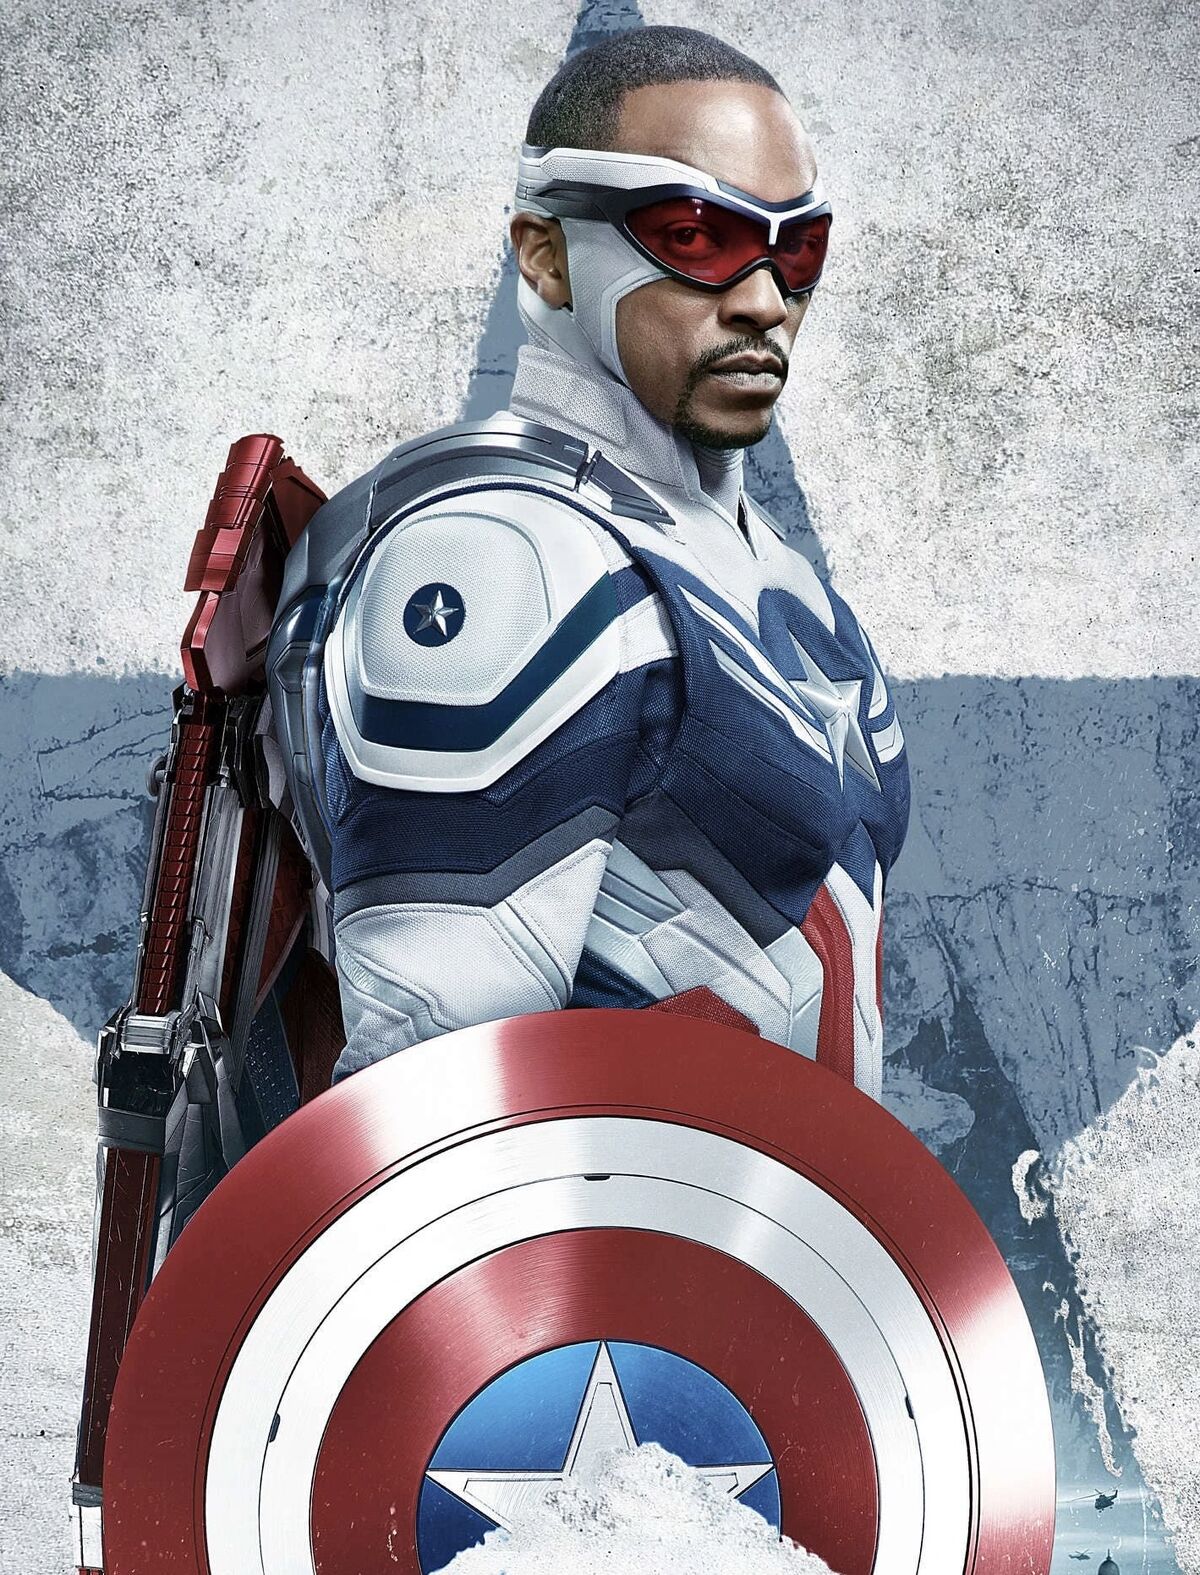 Déguisement Captain America Marvel Avengers - Marvel - 8 ans